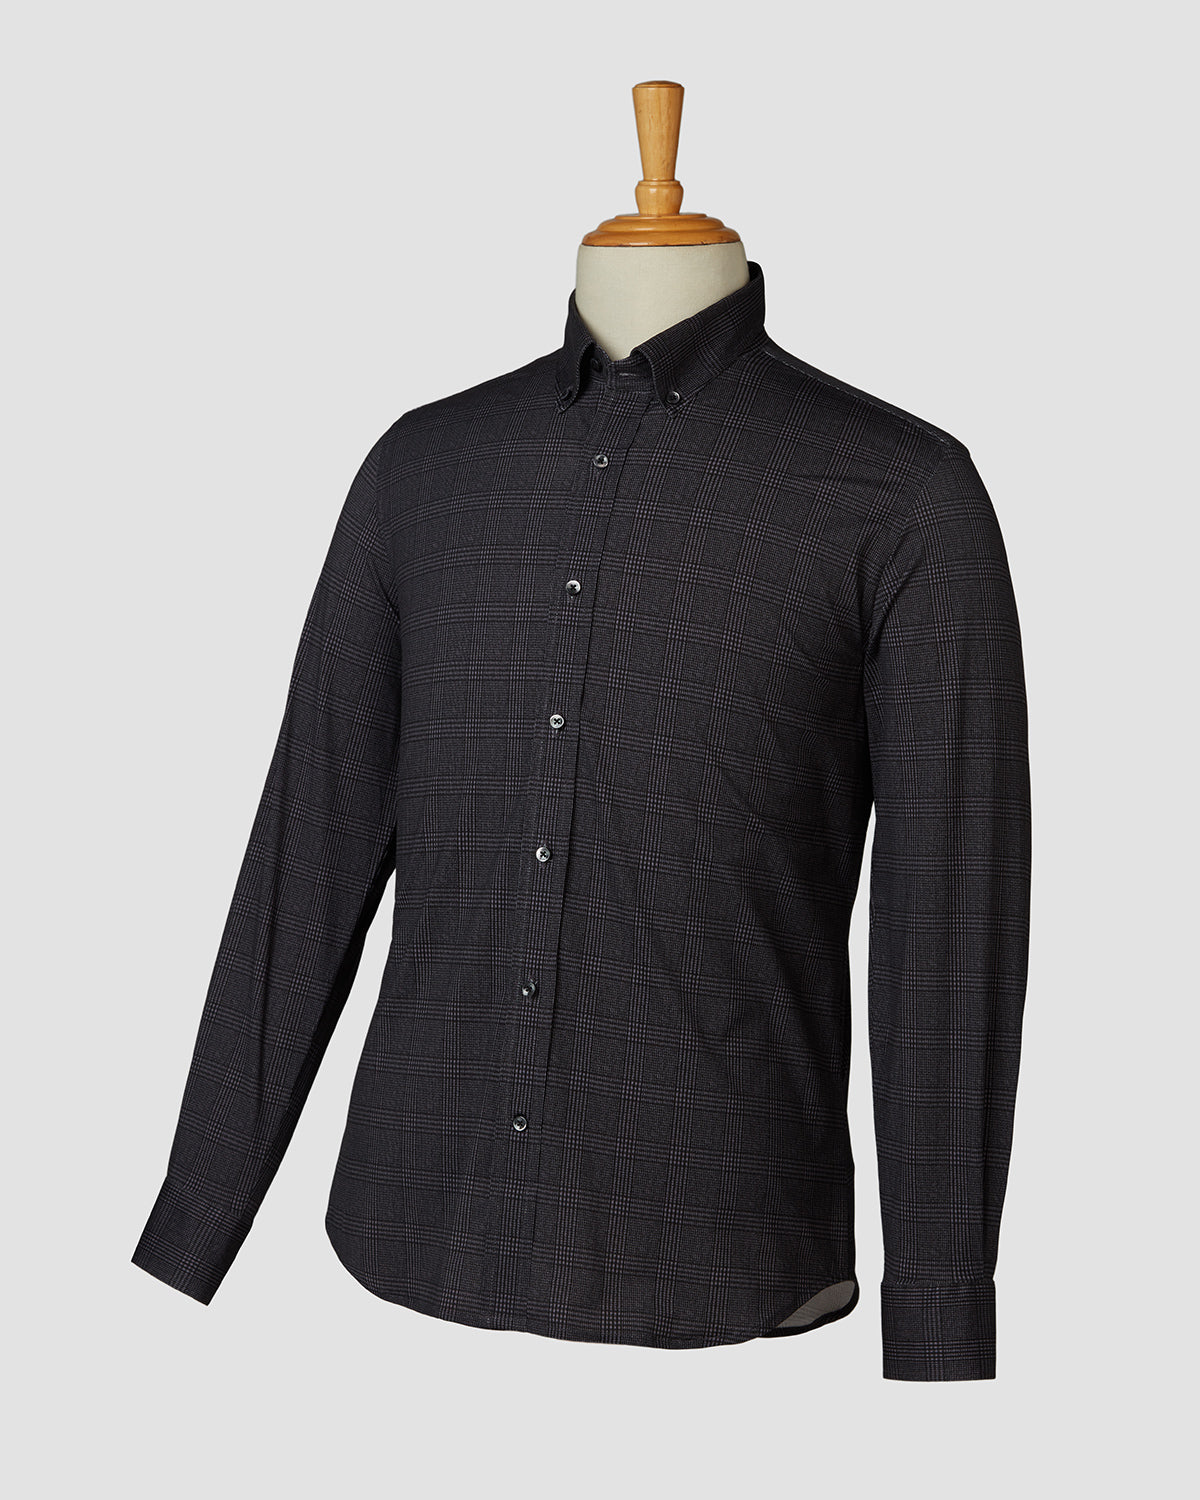 Bombay Shirt Company - Black Agate Knit Shirt